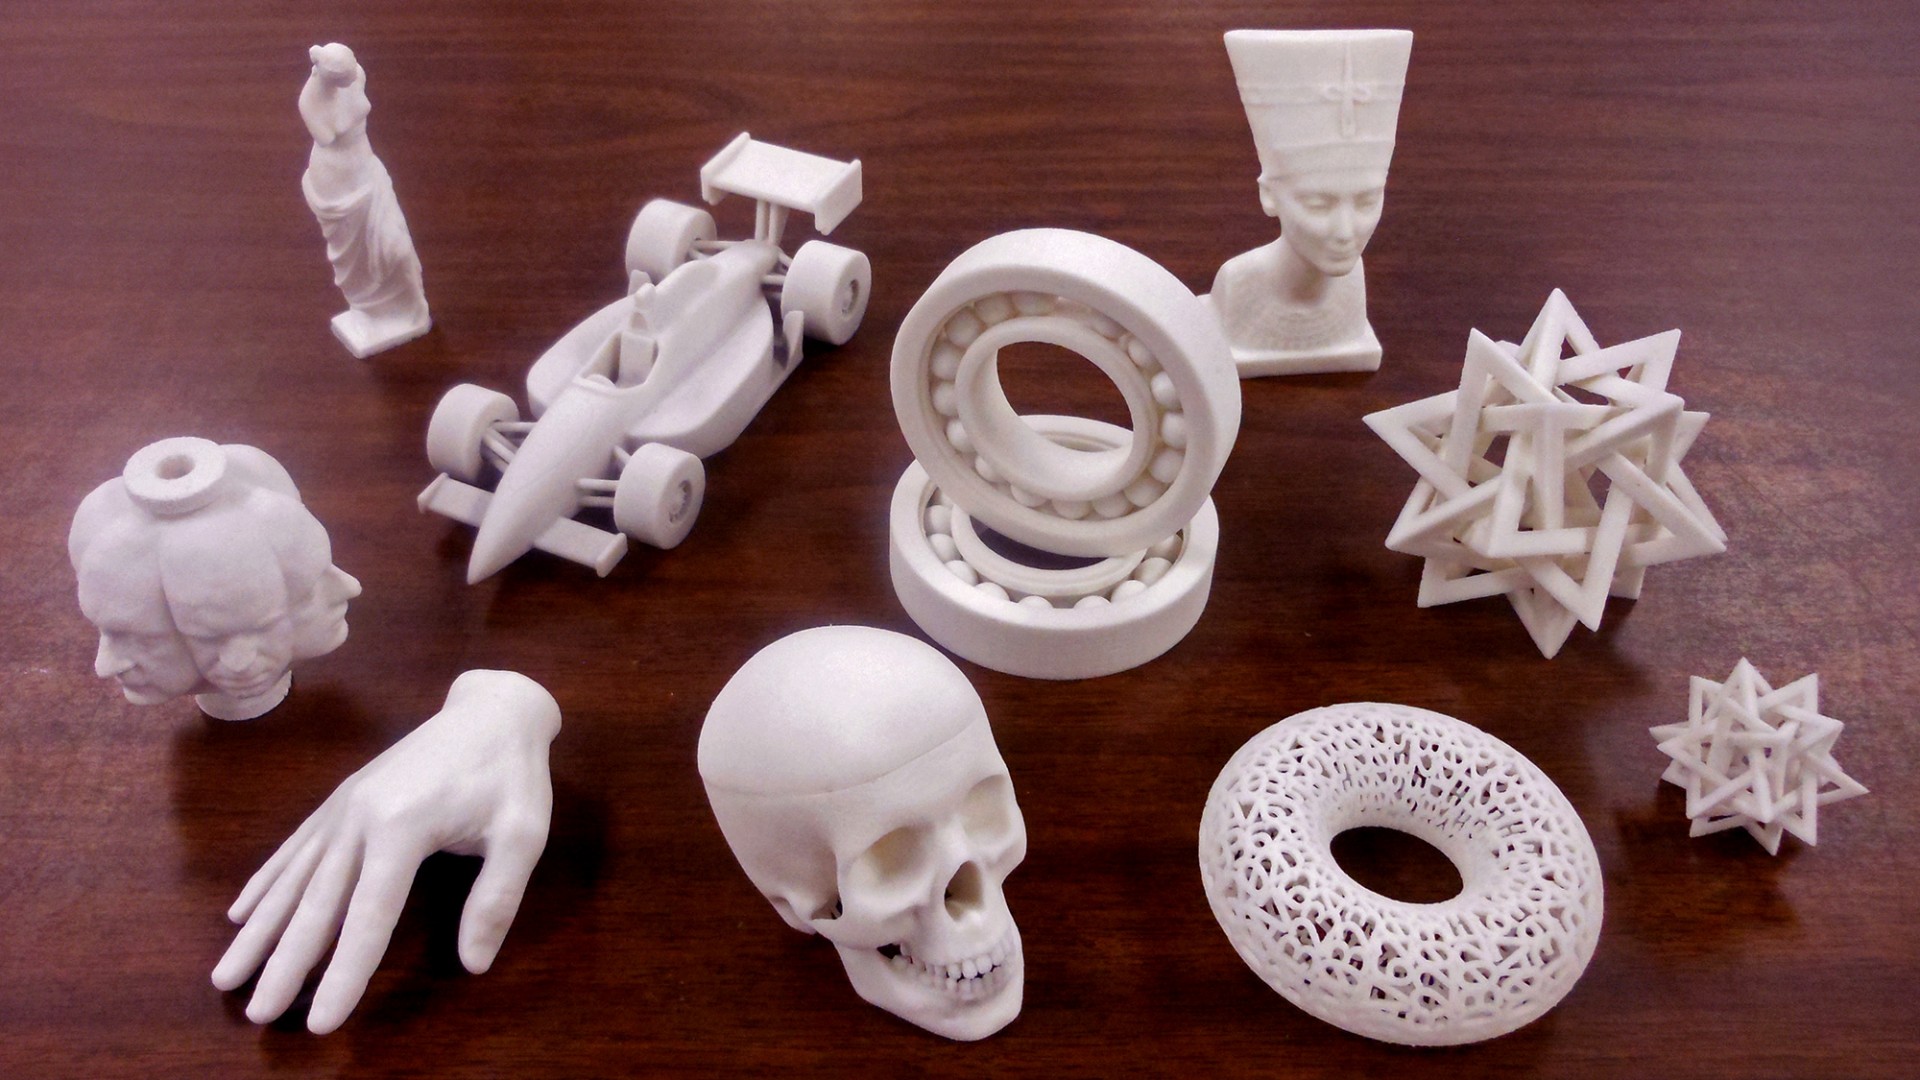 yami yami no mi 3D Models to Print - yeggi